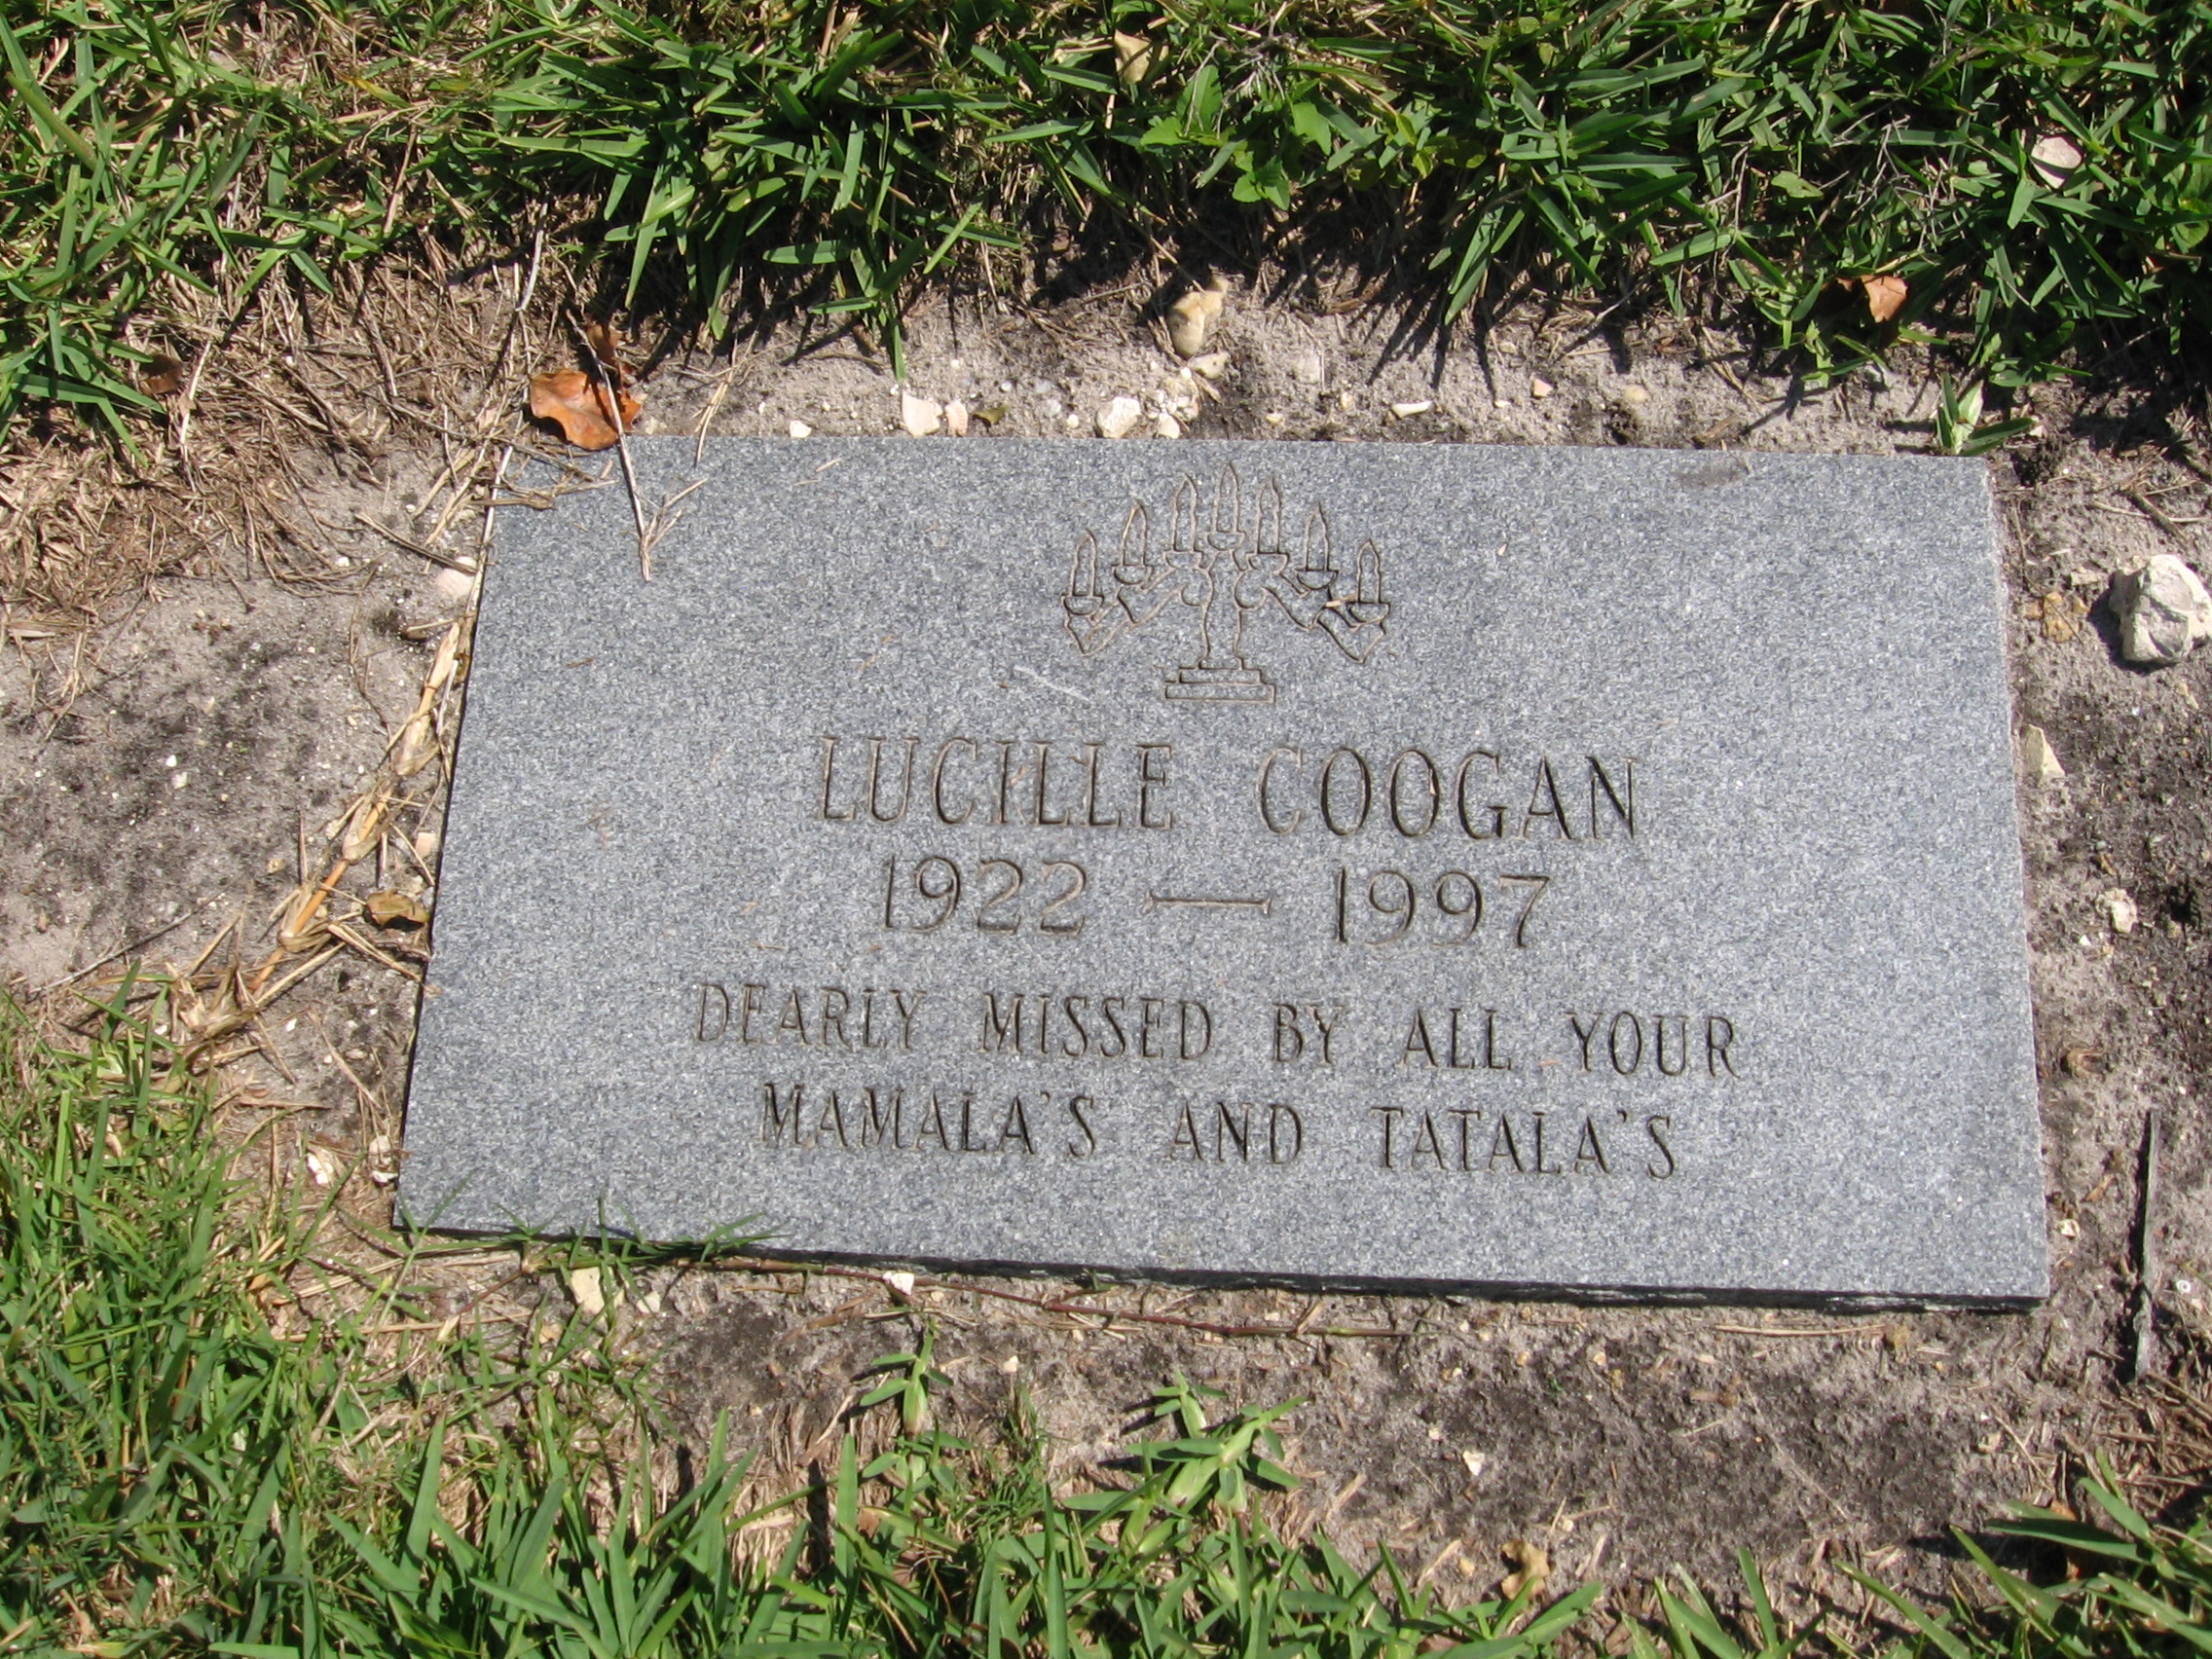 Lucille Coogan